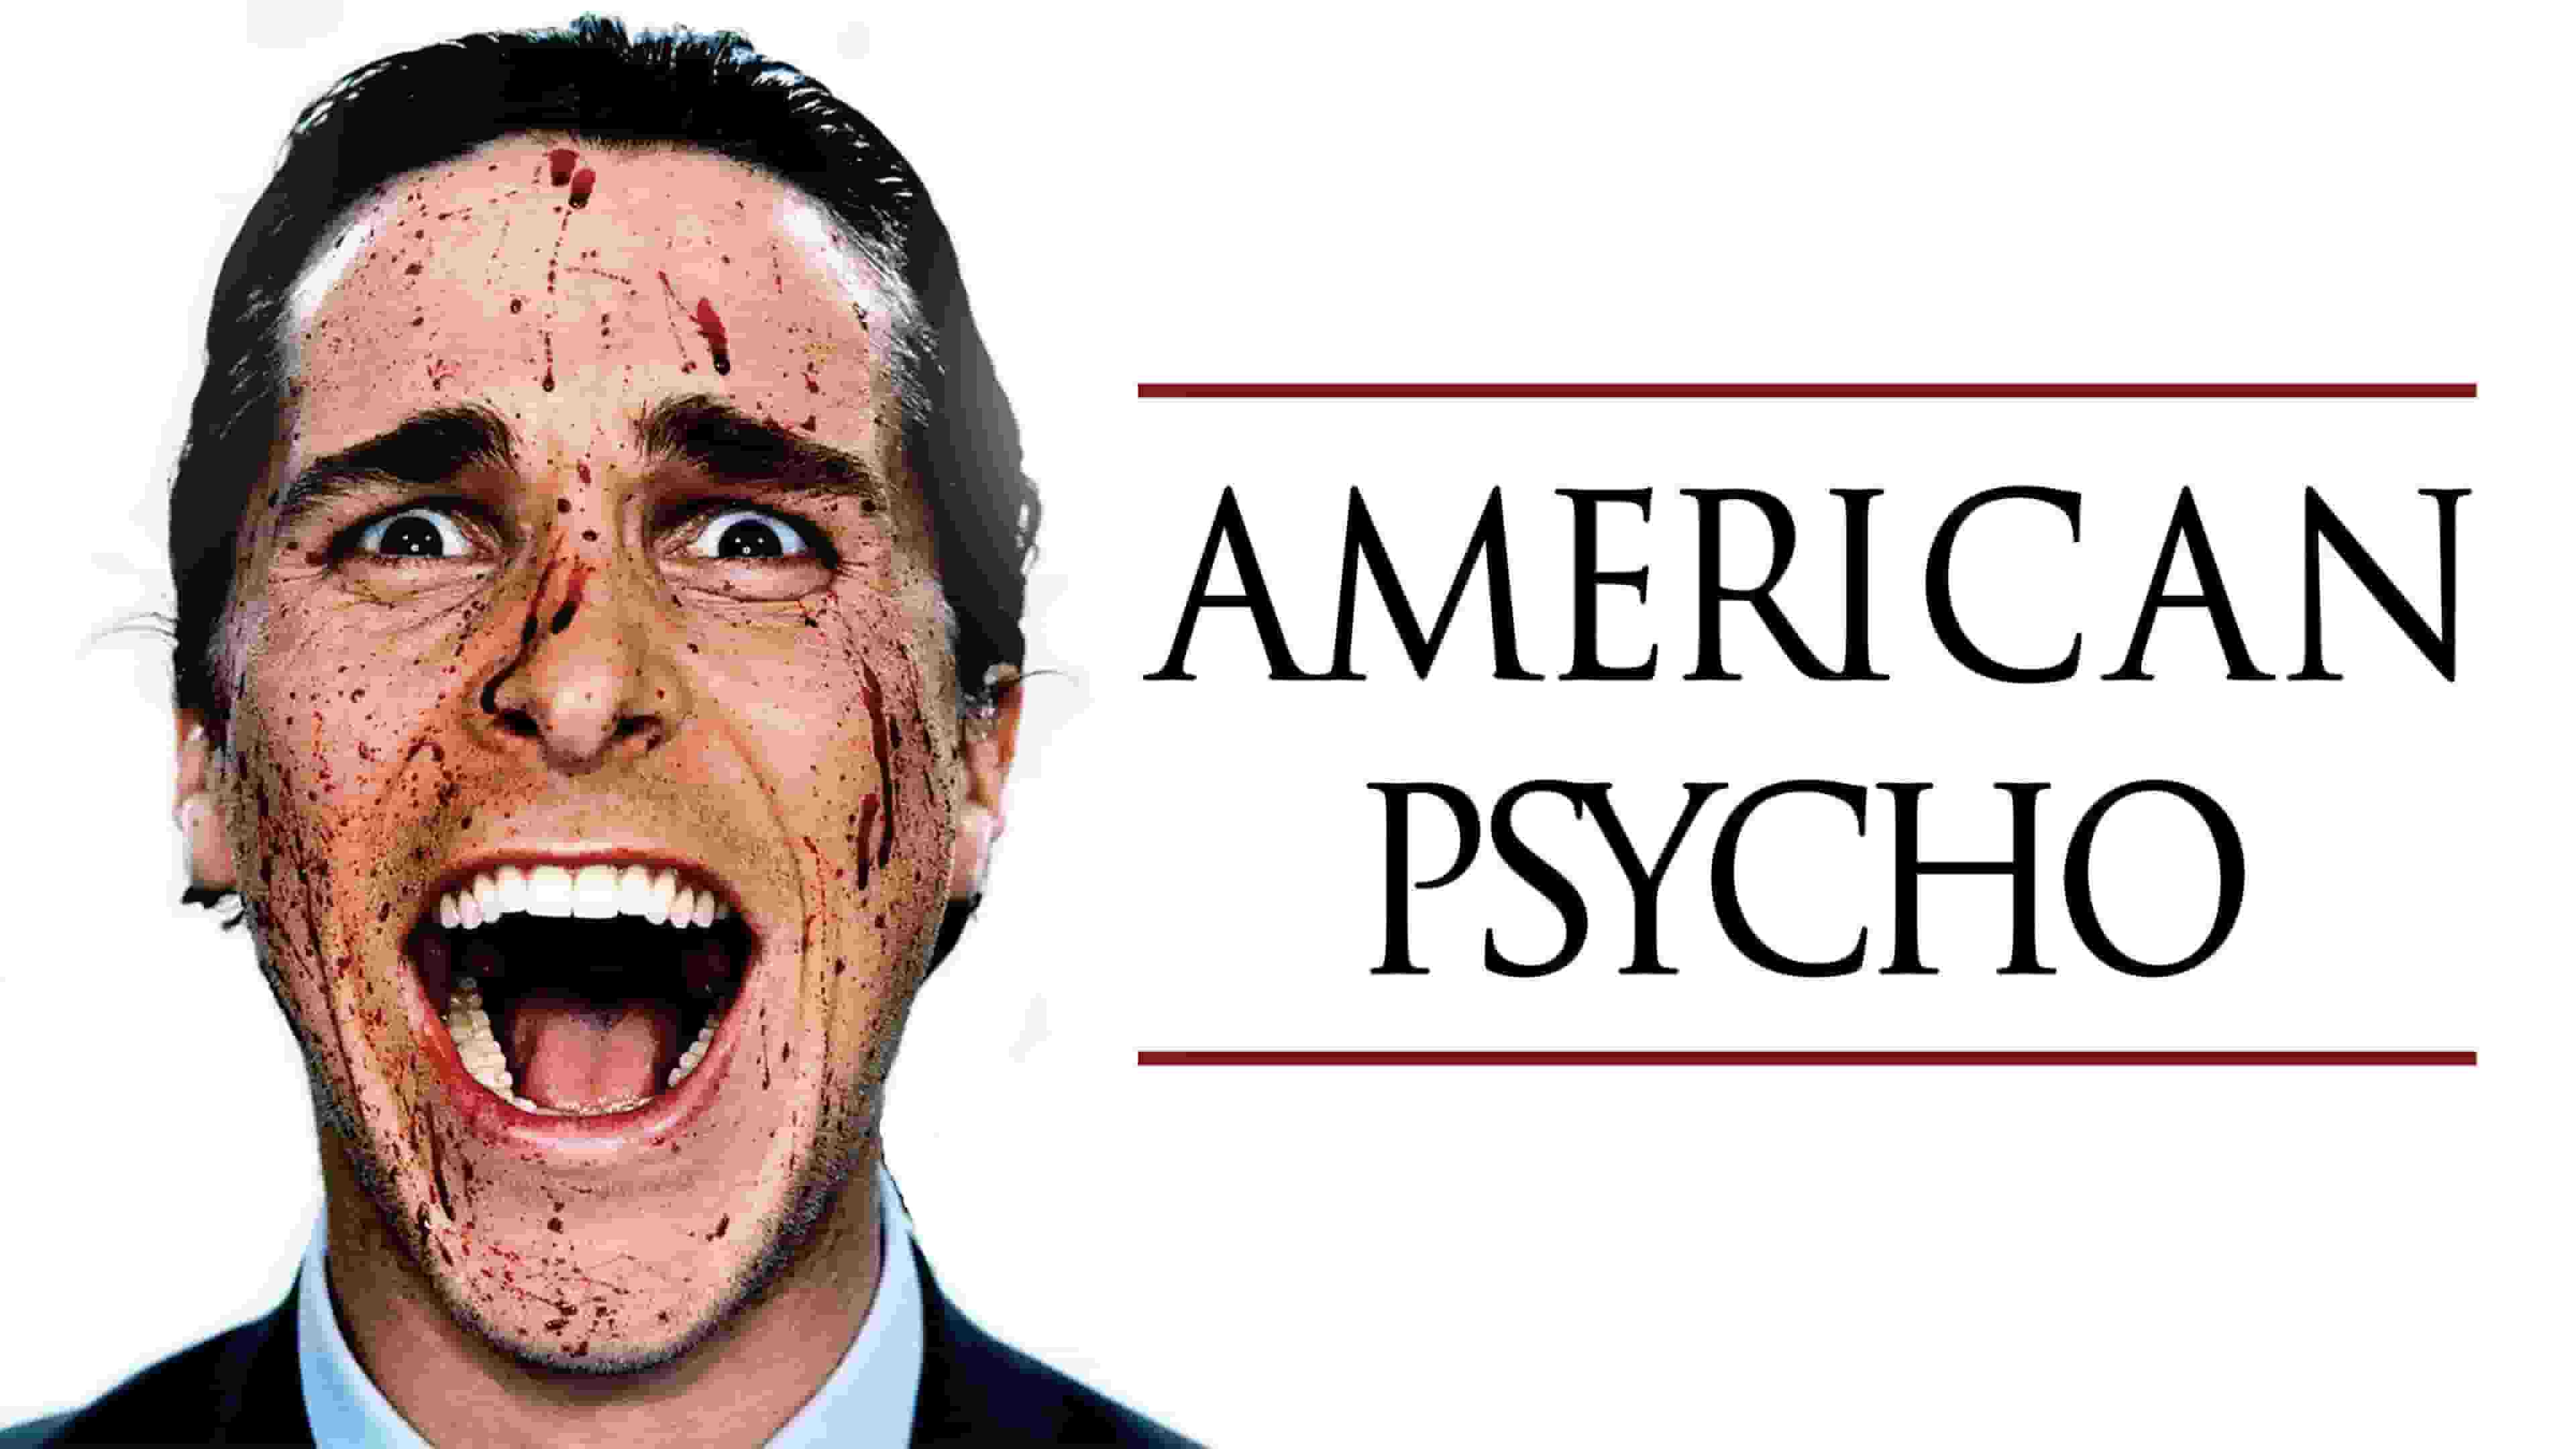 Title art for dark comedy thriller American Psycho